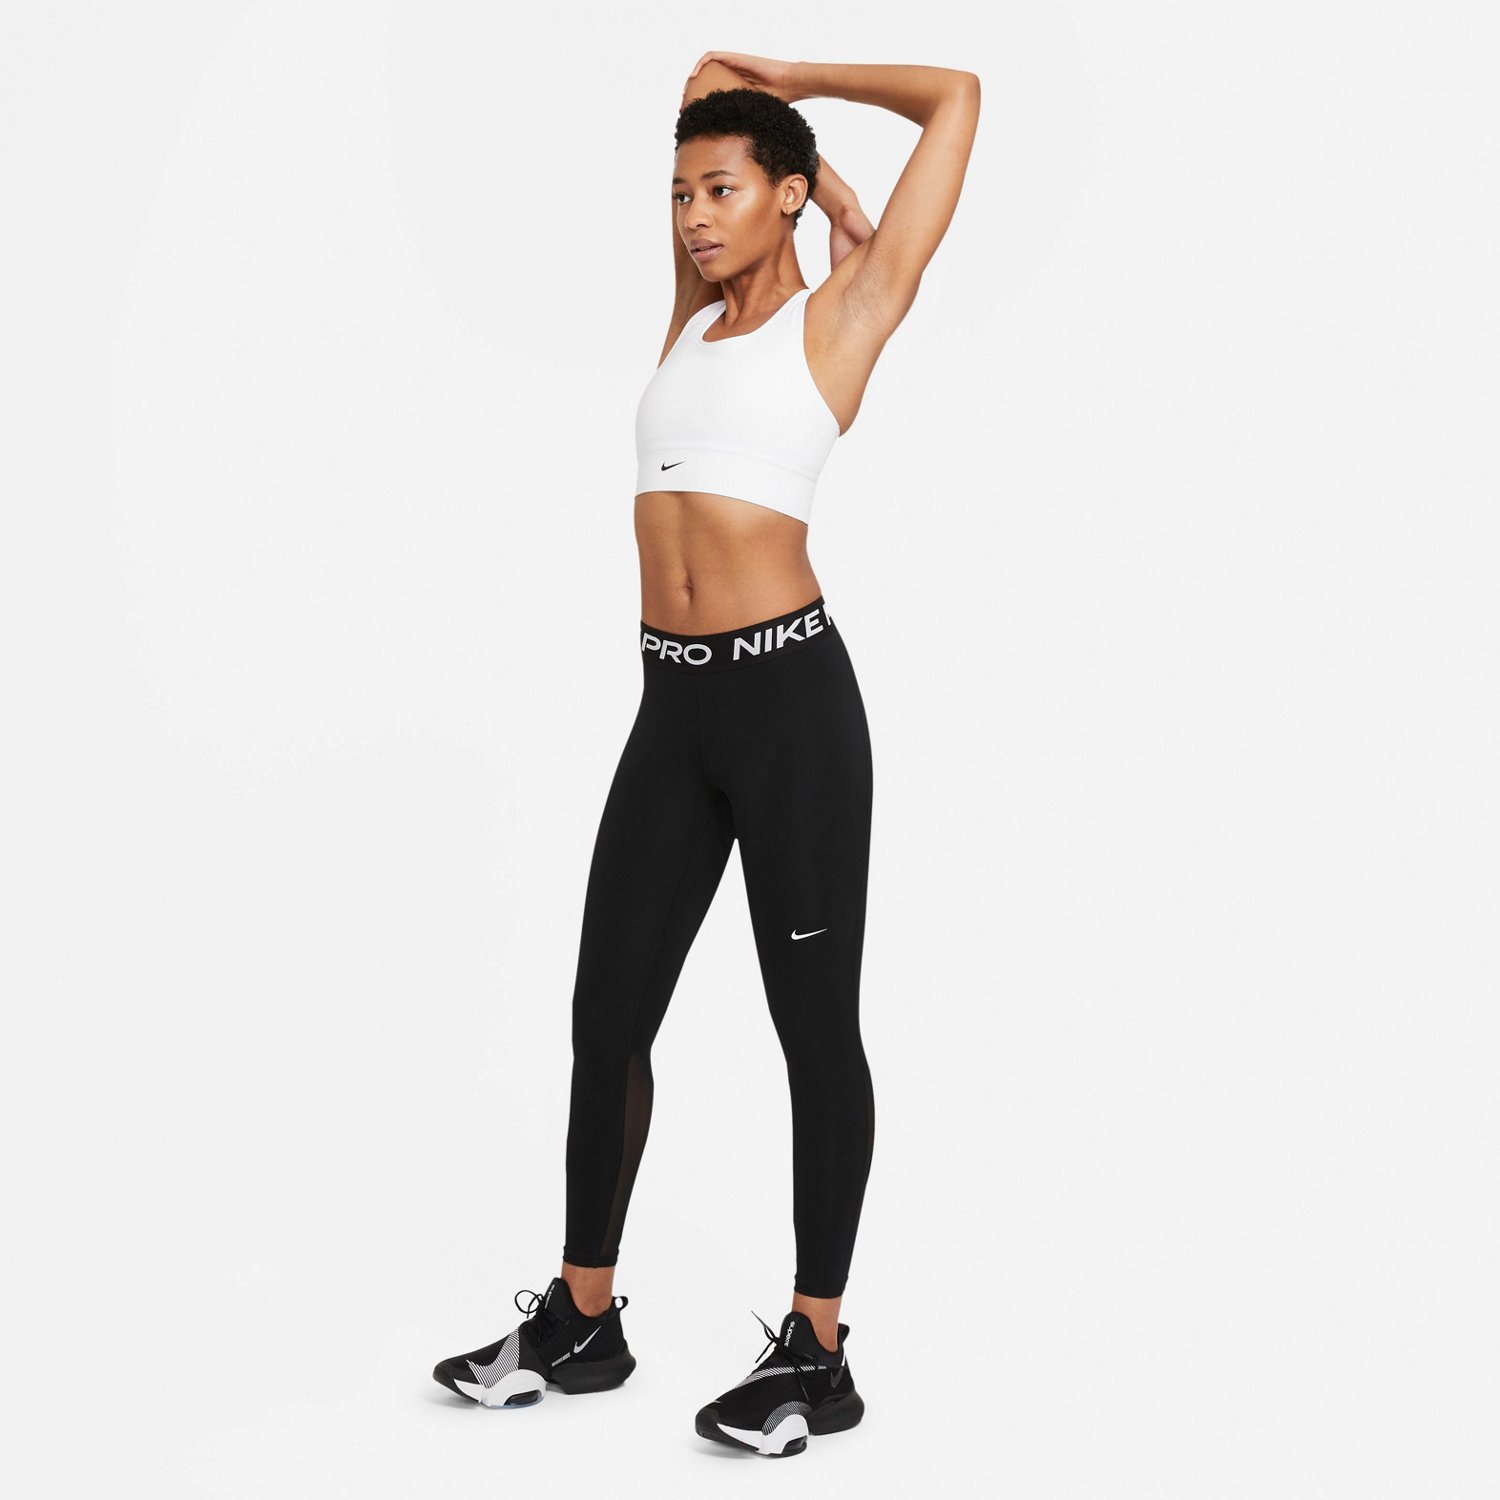 Nike Women'sPro 365 Tights